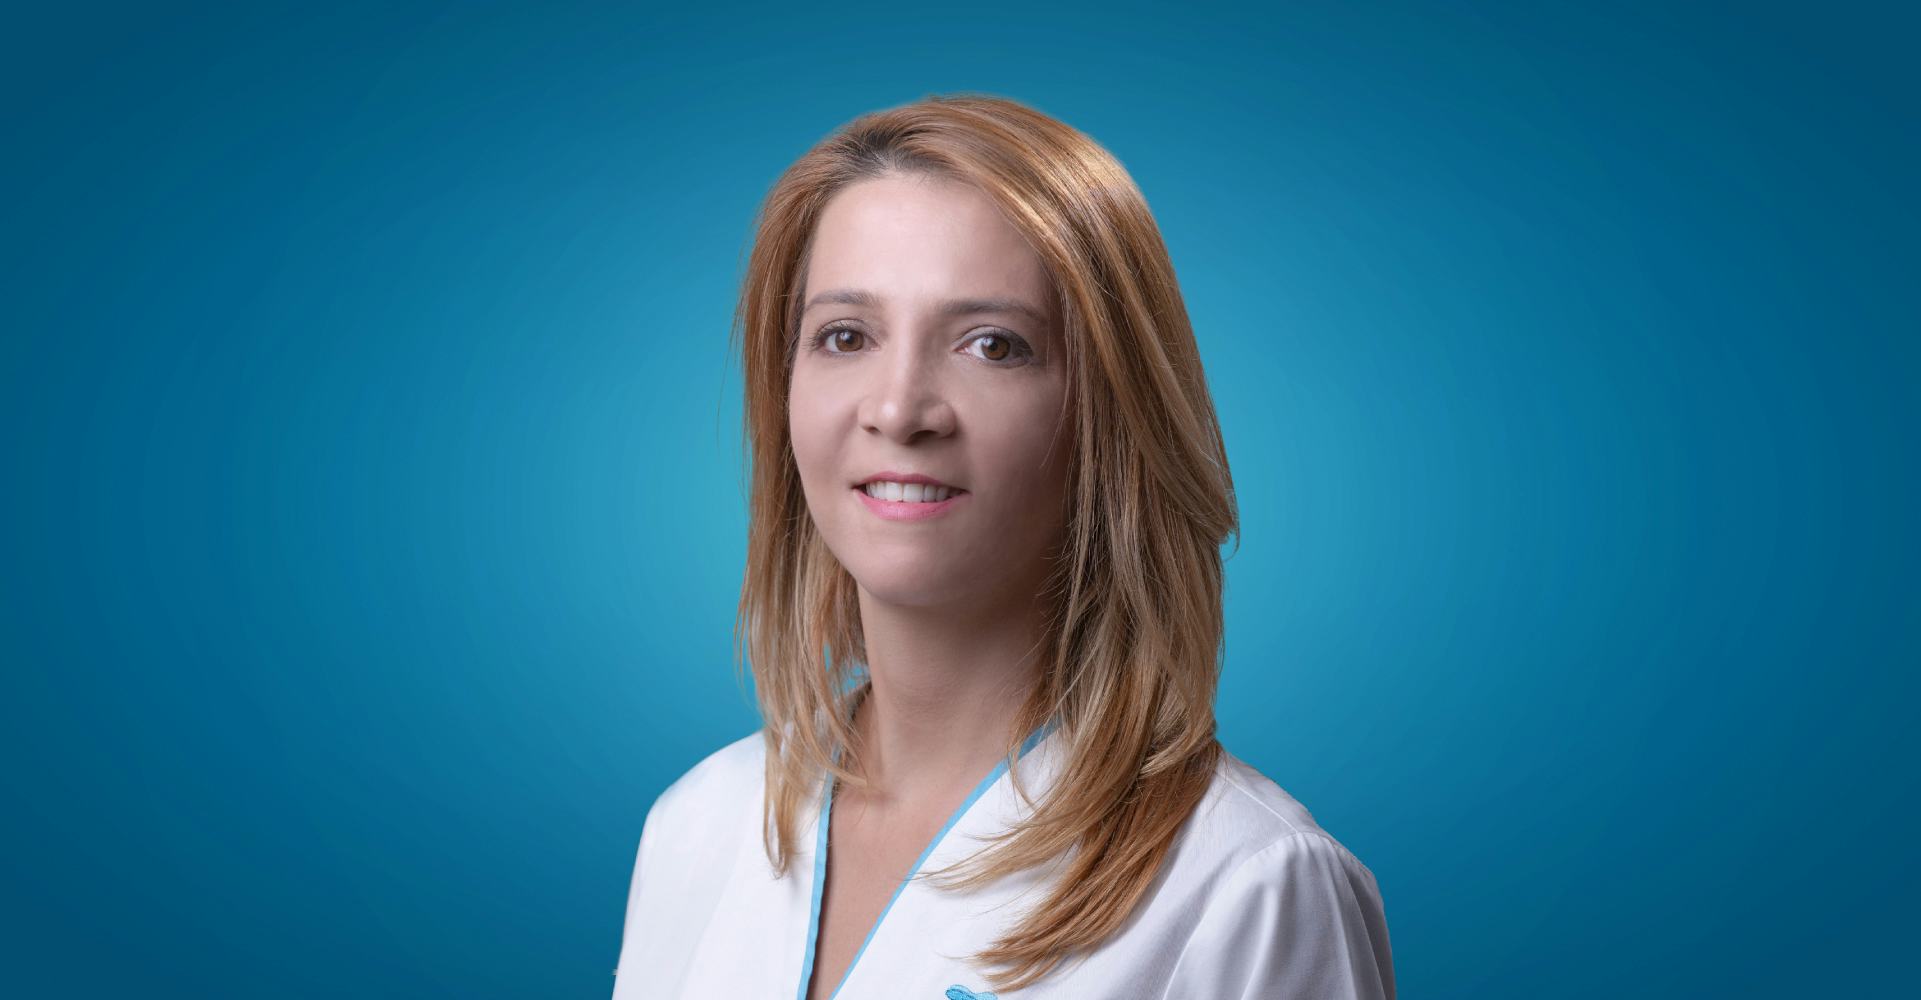 Doctor Claudia Nica, medic cardiolog ARES